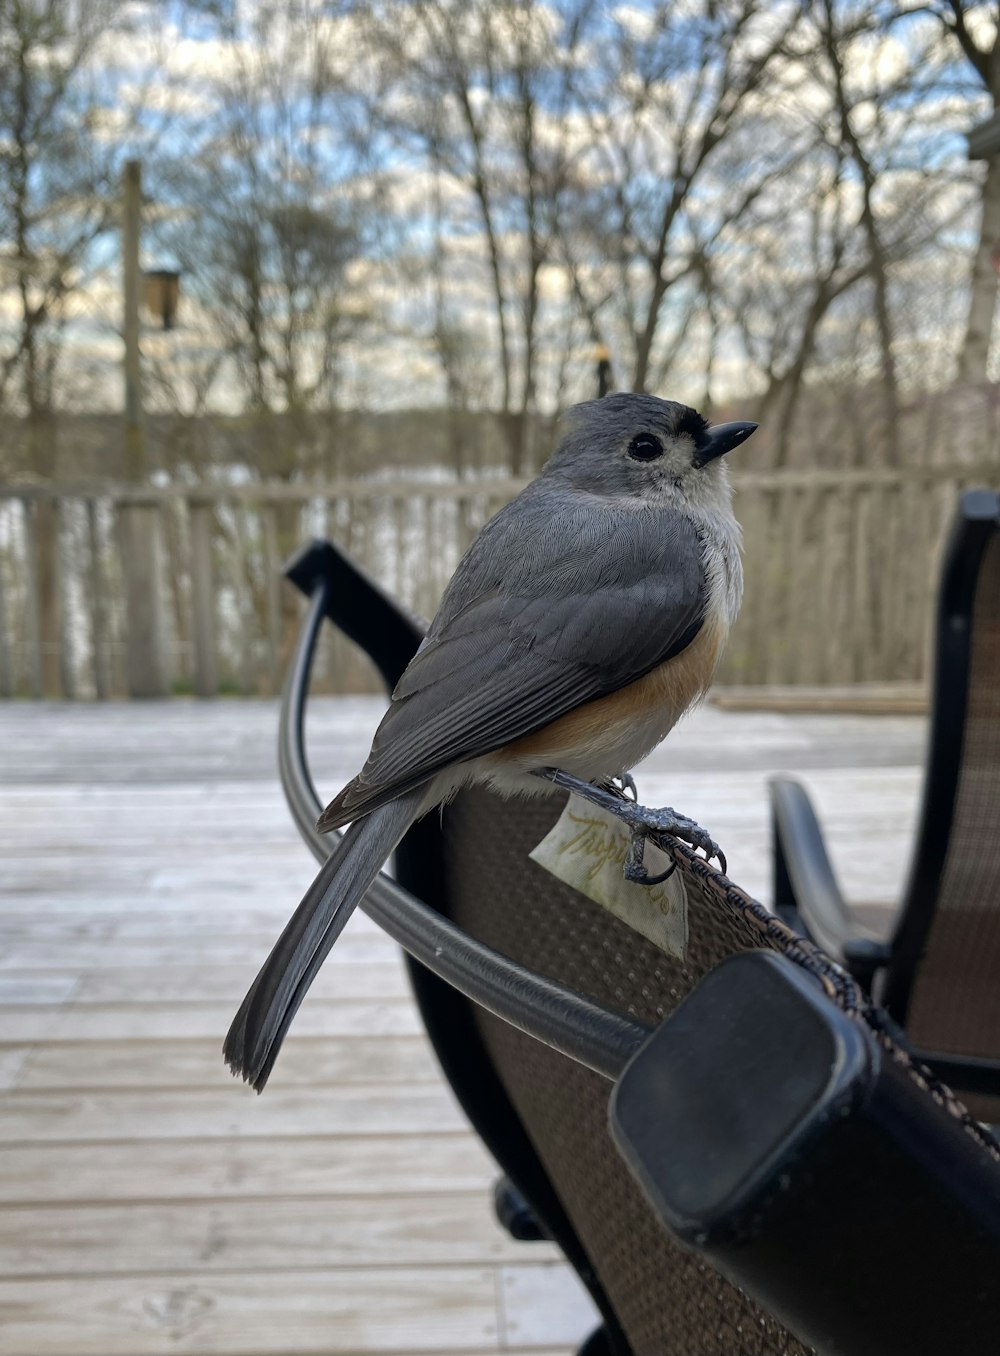 a bird sitting on a chair on a deck